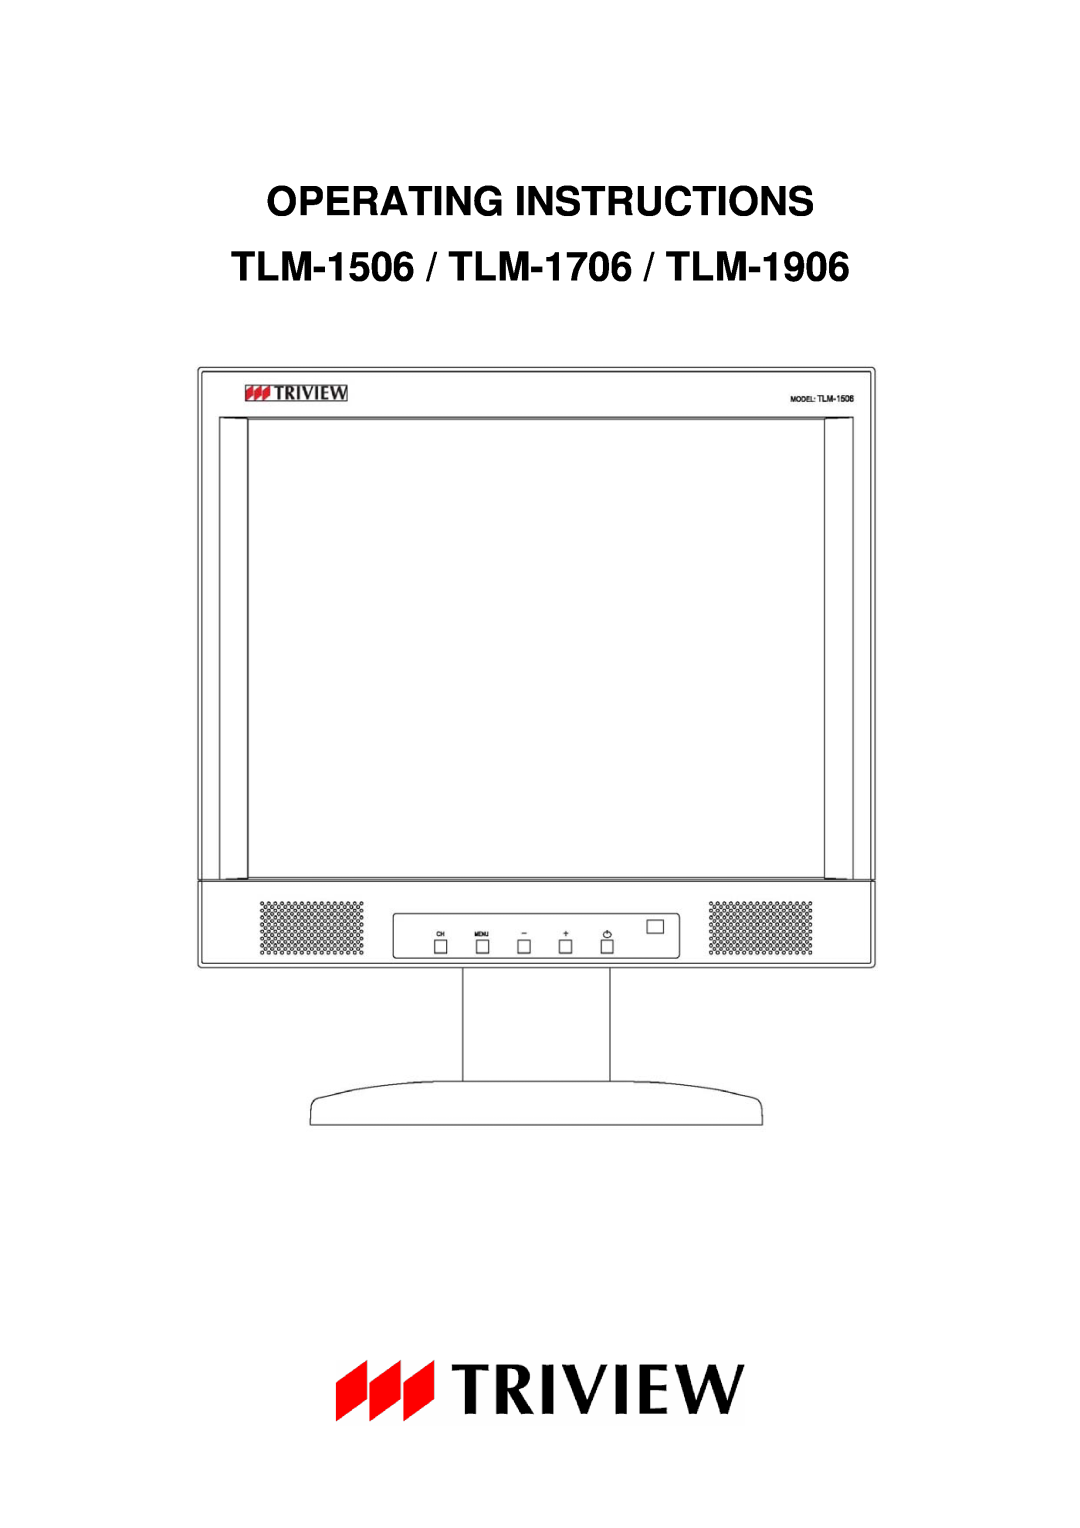 Tatung operating instructions OPERATING INSTRUCTIONS TLM-1506 / TLM-1706 / TLM-1906 